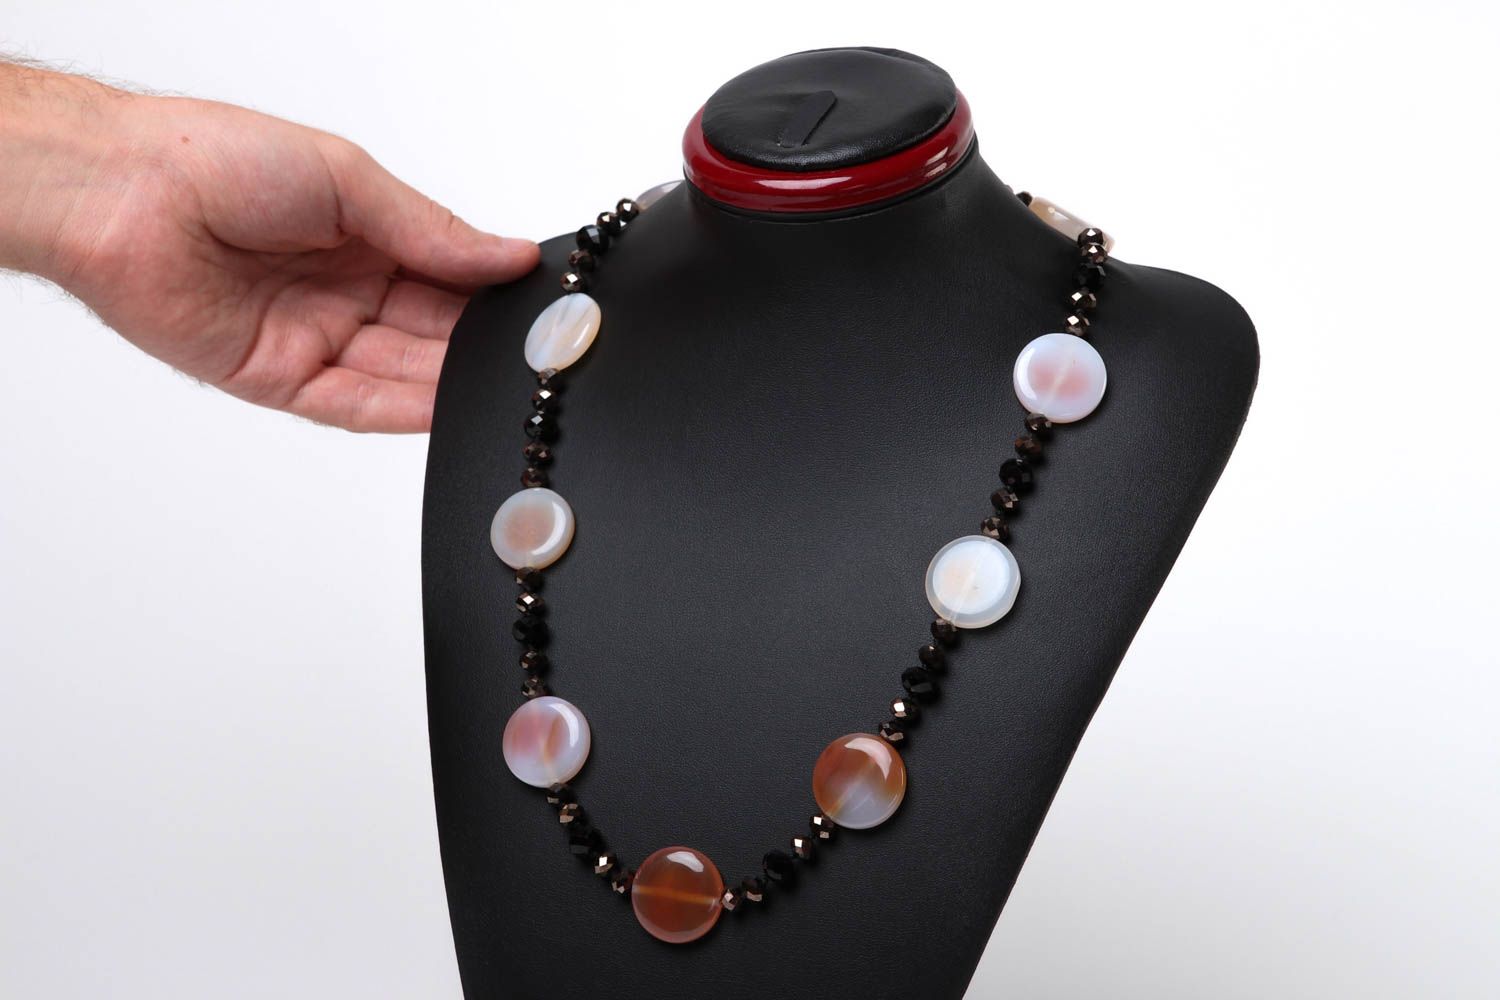 Handmade necklace bead necklace gemstone jewelry designer accessories gift ideas photo 5